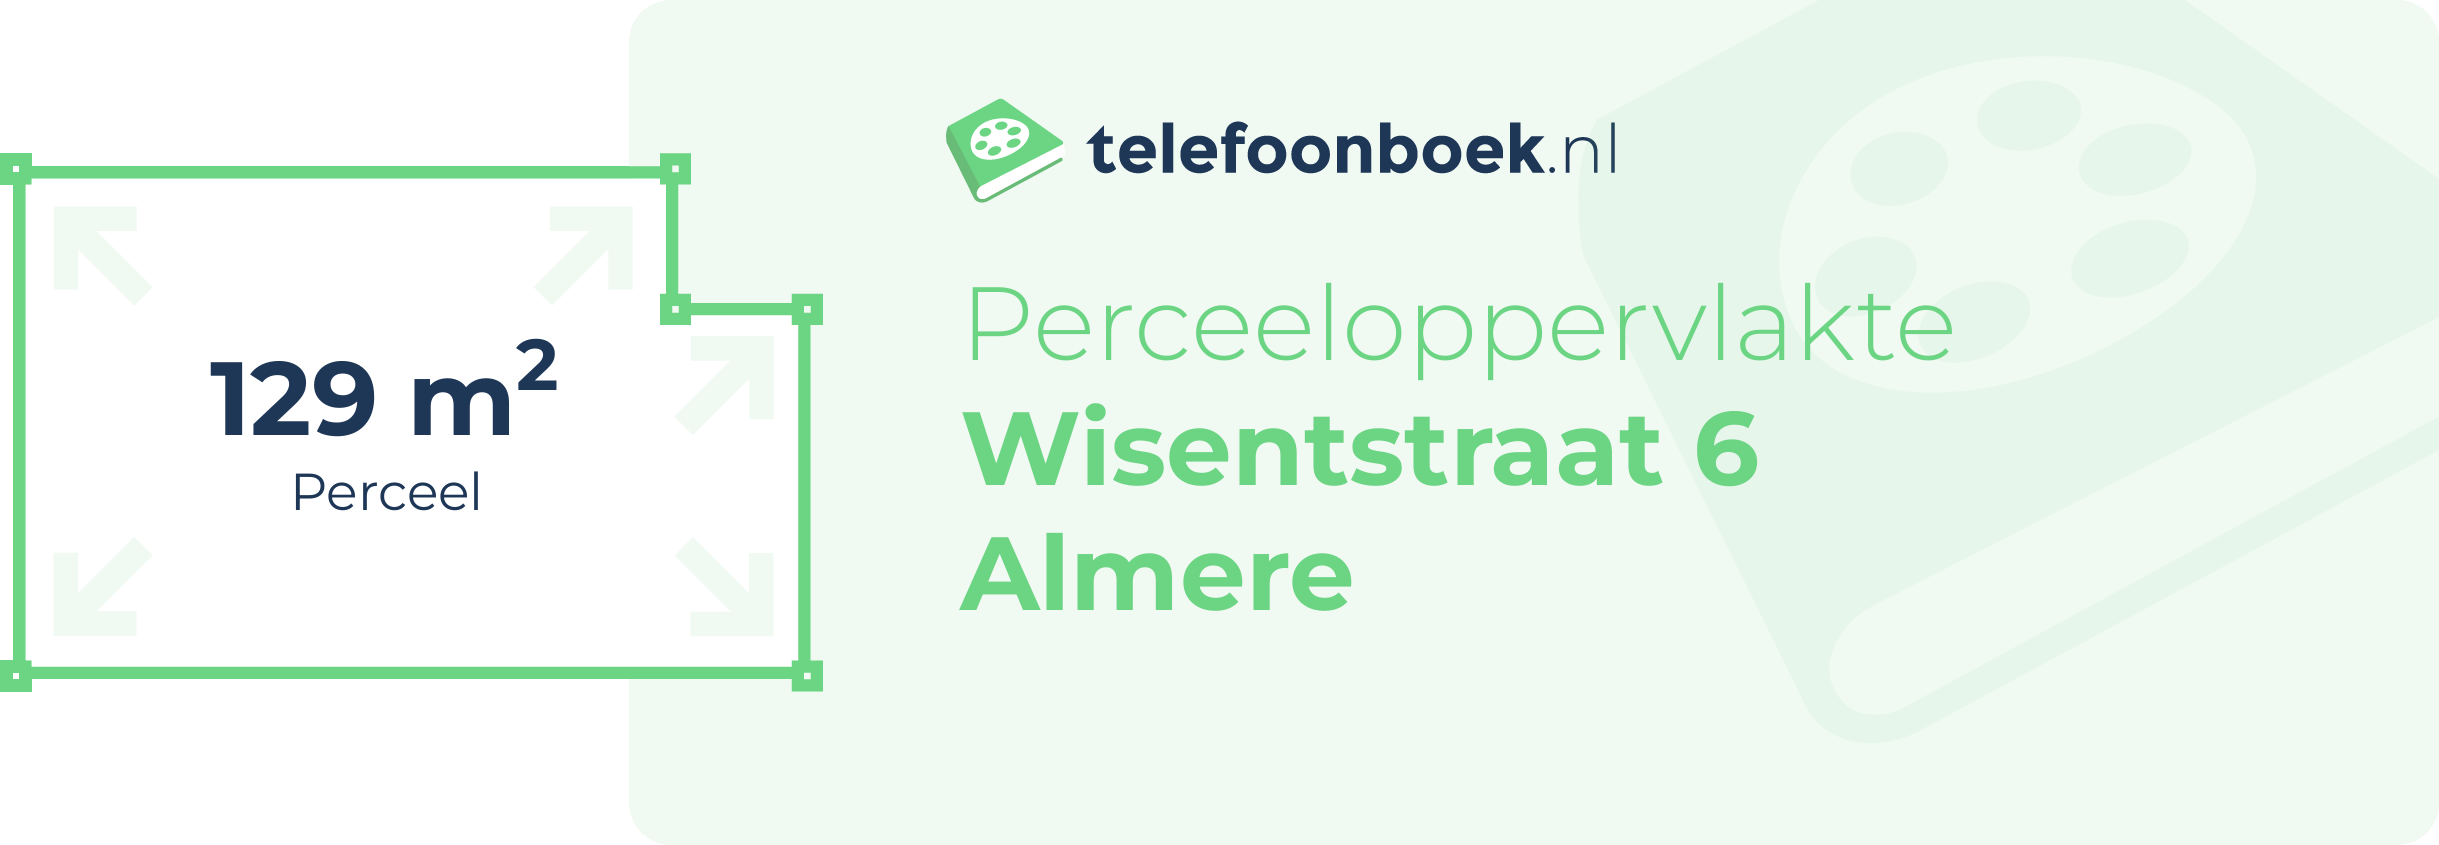 Perceeloppervlakte Wisentstraat 6 Almere